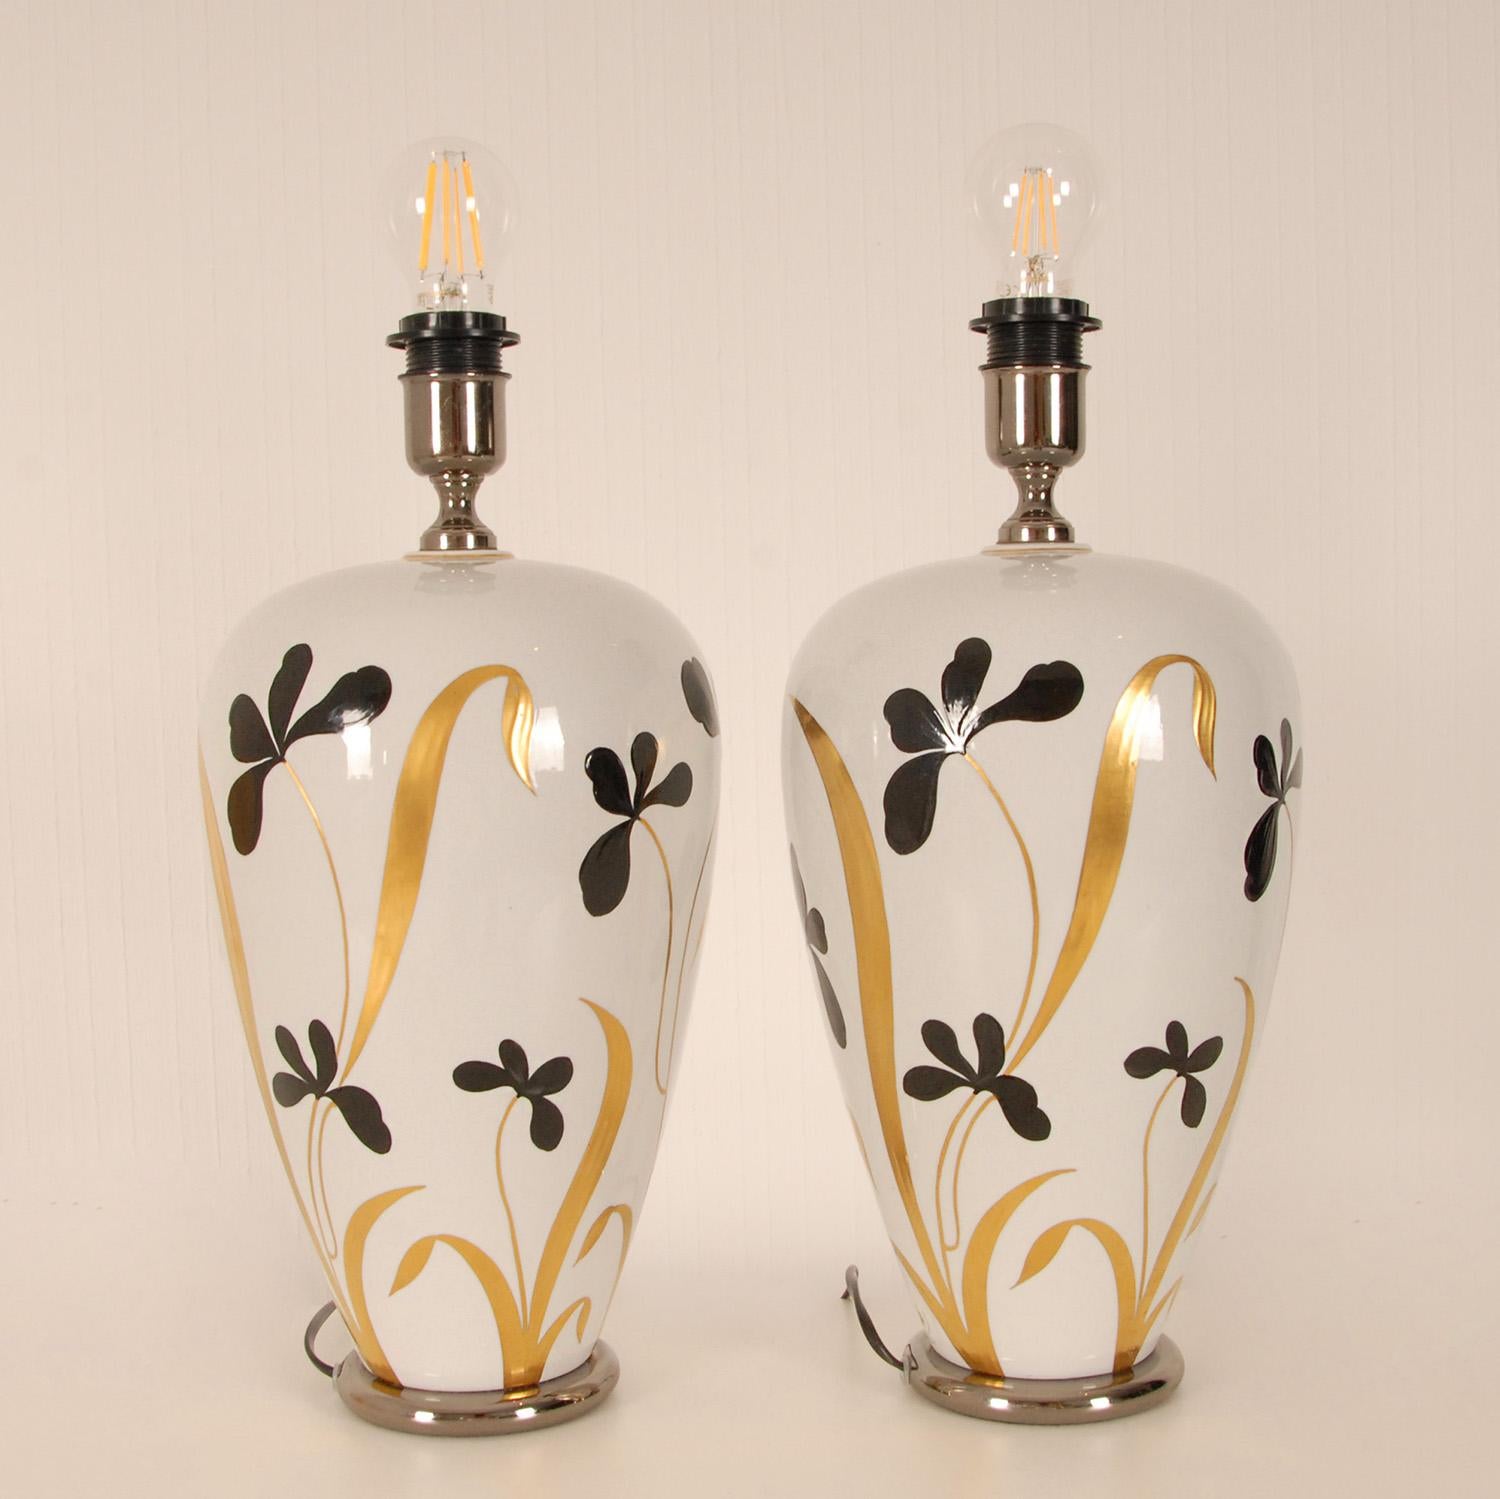 Vintage 1970s Italian Ceramic Vase Lamps Gold Black White Porcelain, a Pair For Sale 3